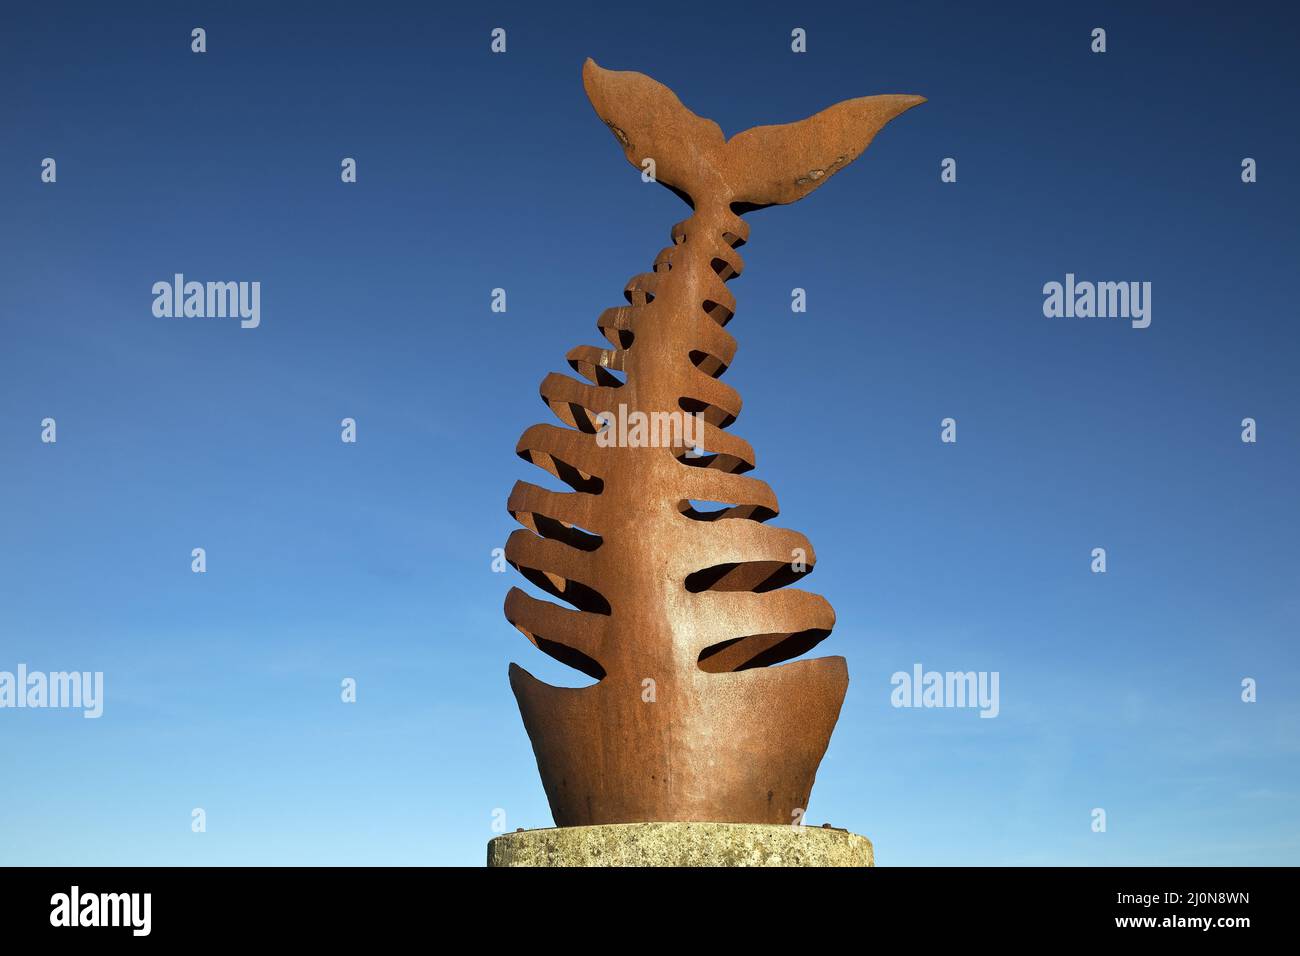 Sculpture titled Piranha, colloquially called herringbone, Greetsiel, Germany, Europe Stock Photo